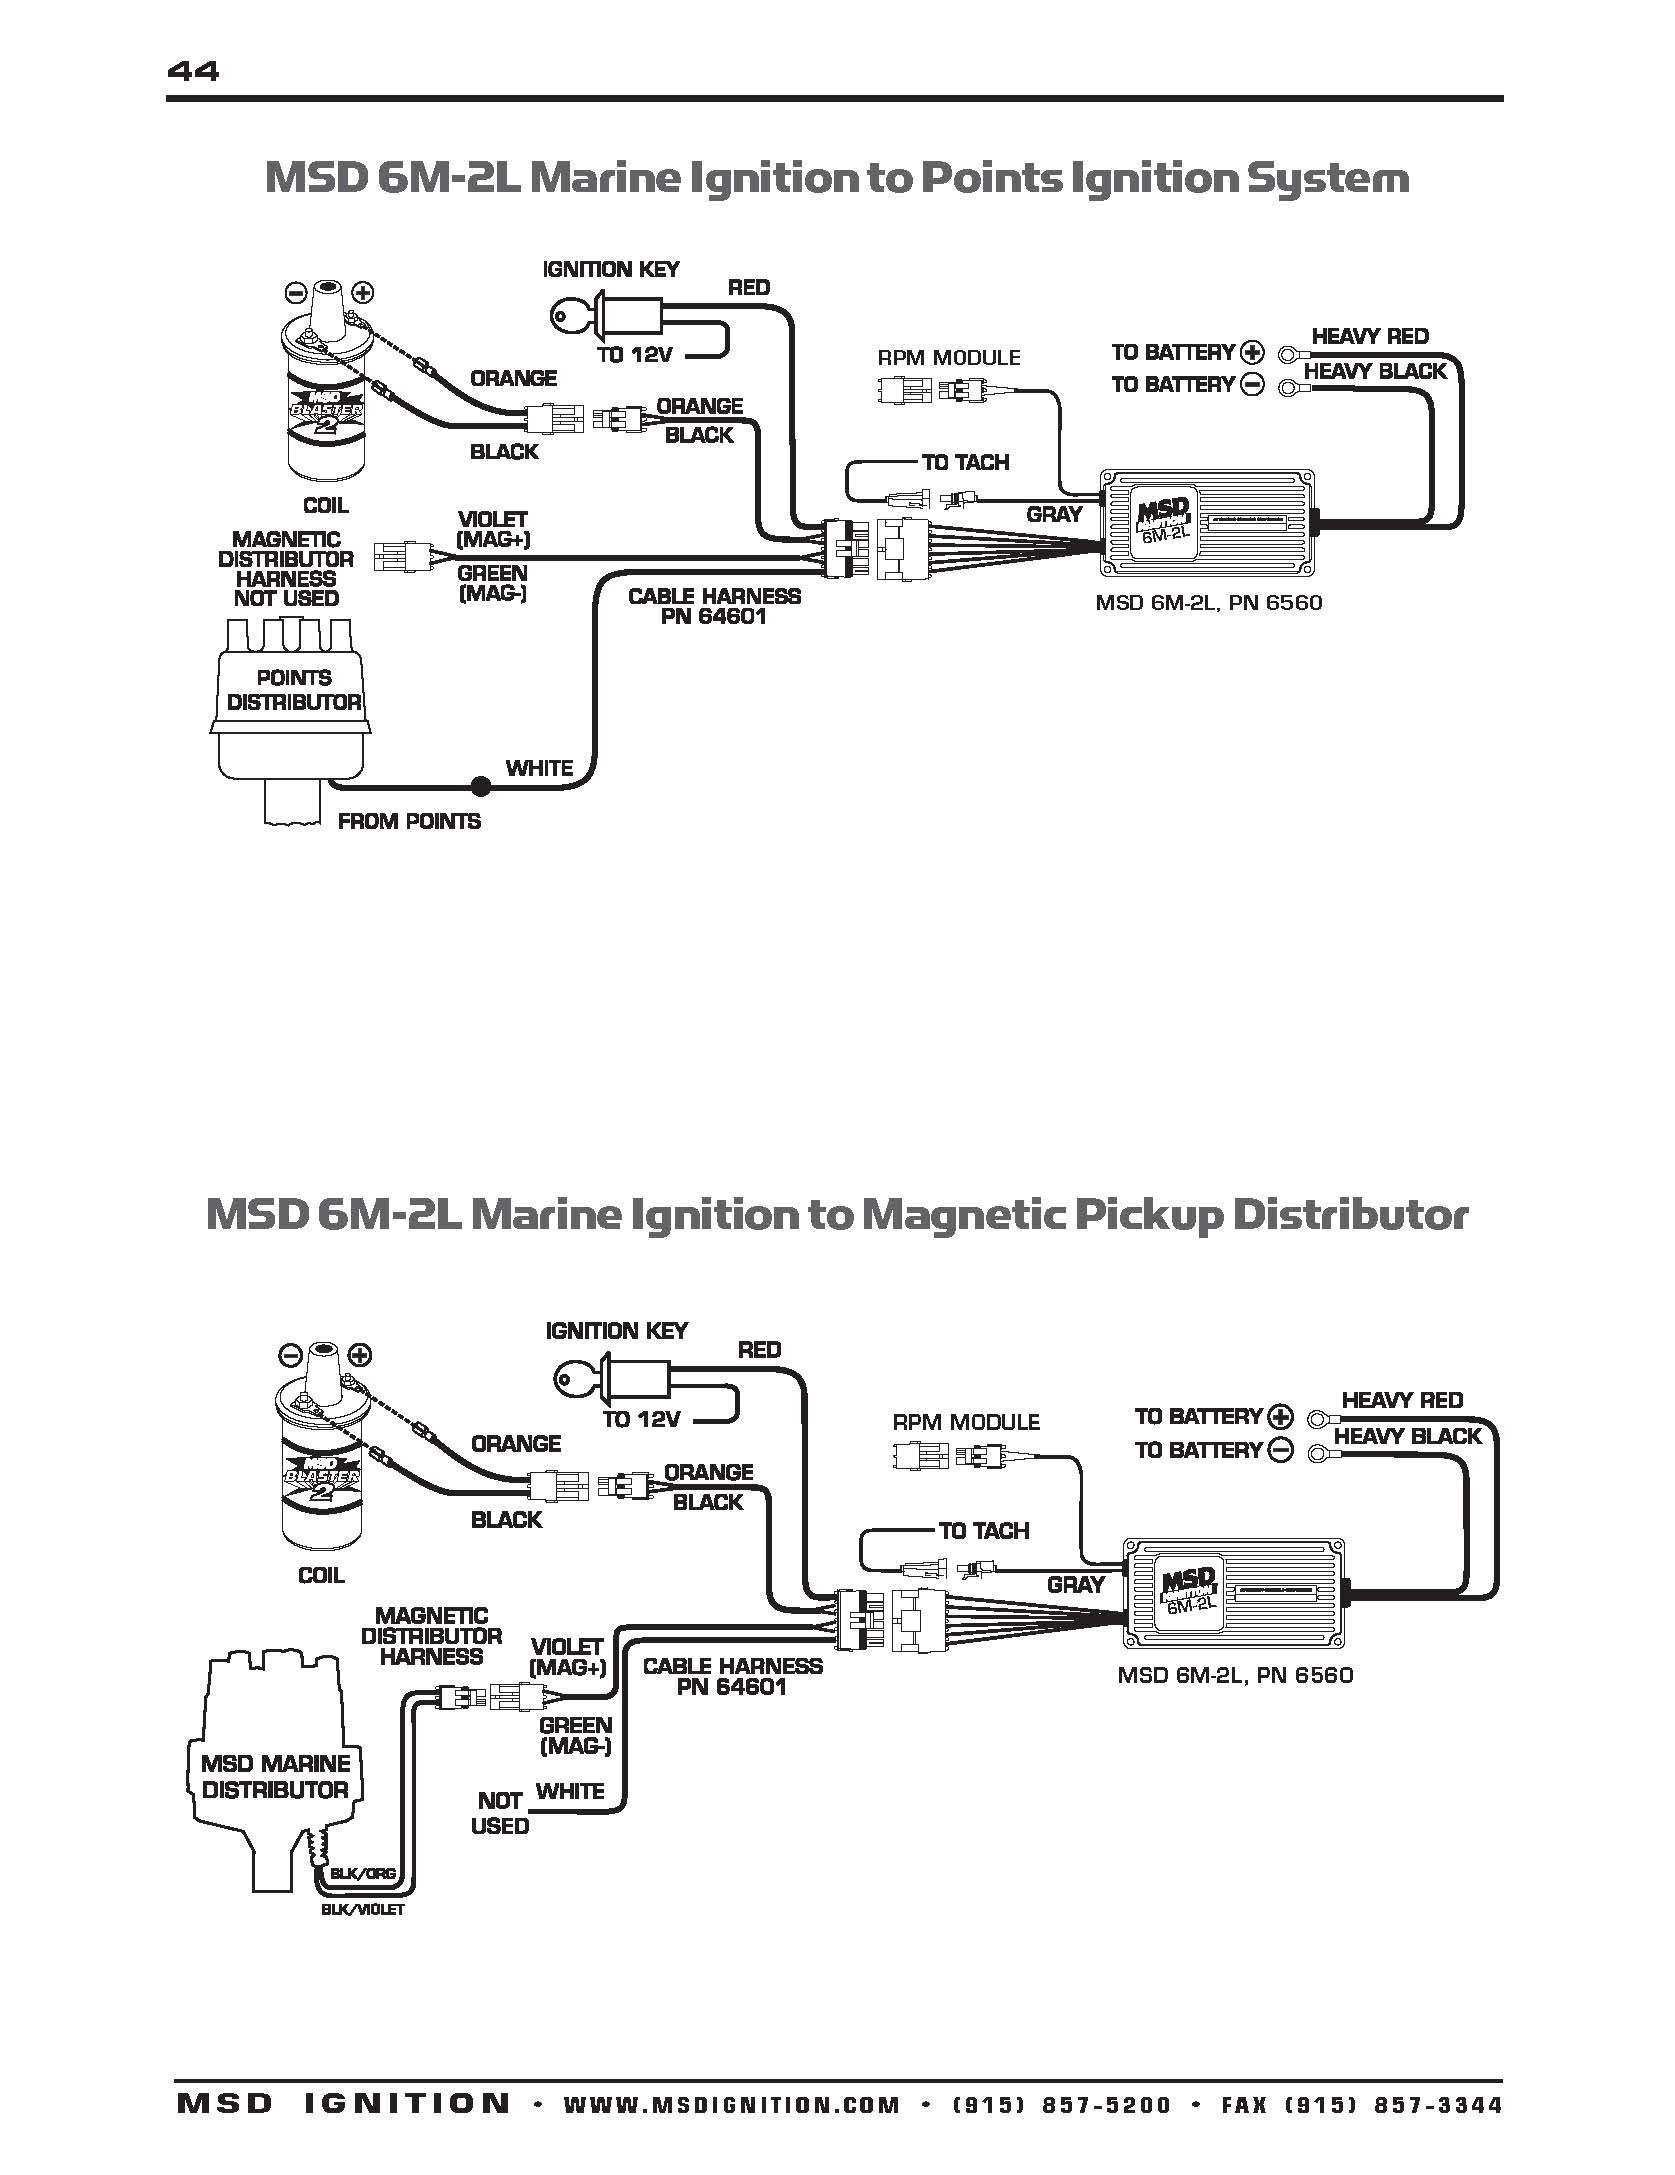 Msd Ignition System Wiring Diagram Fresh Wiring the Msd Ignition System Infinitybox within Msd Diagram